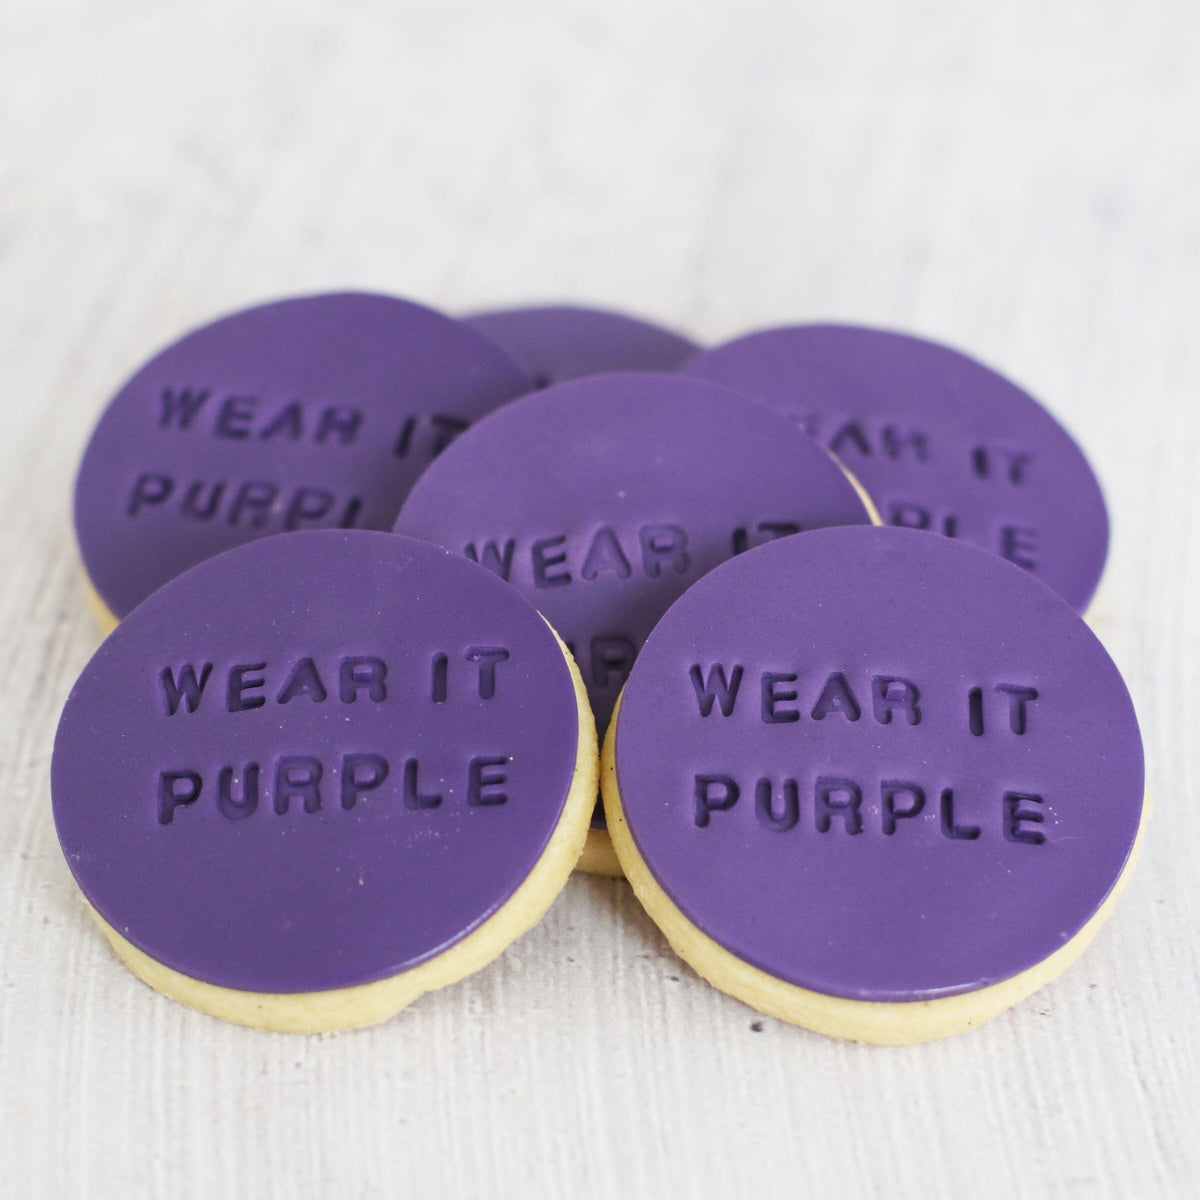 Wear it Purple Shortbread Cookies Cookies The Cupcake Queens 